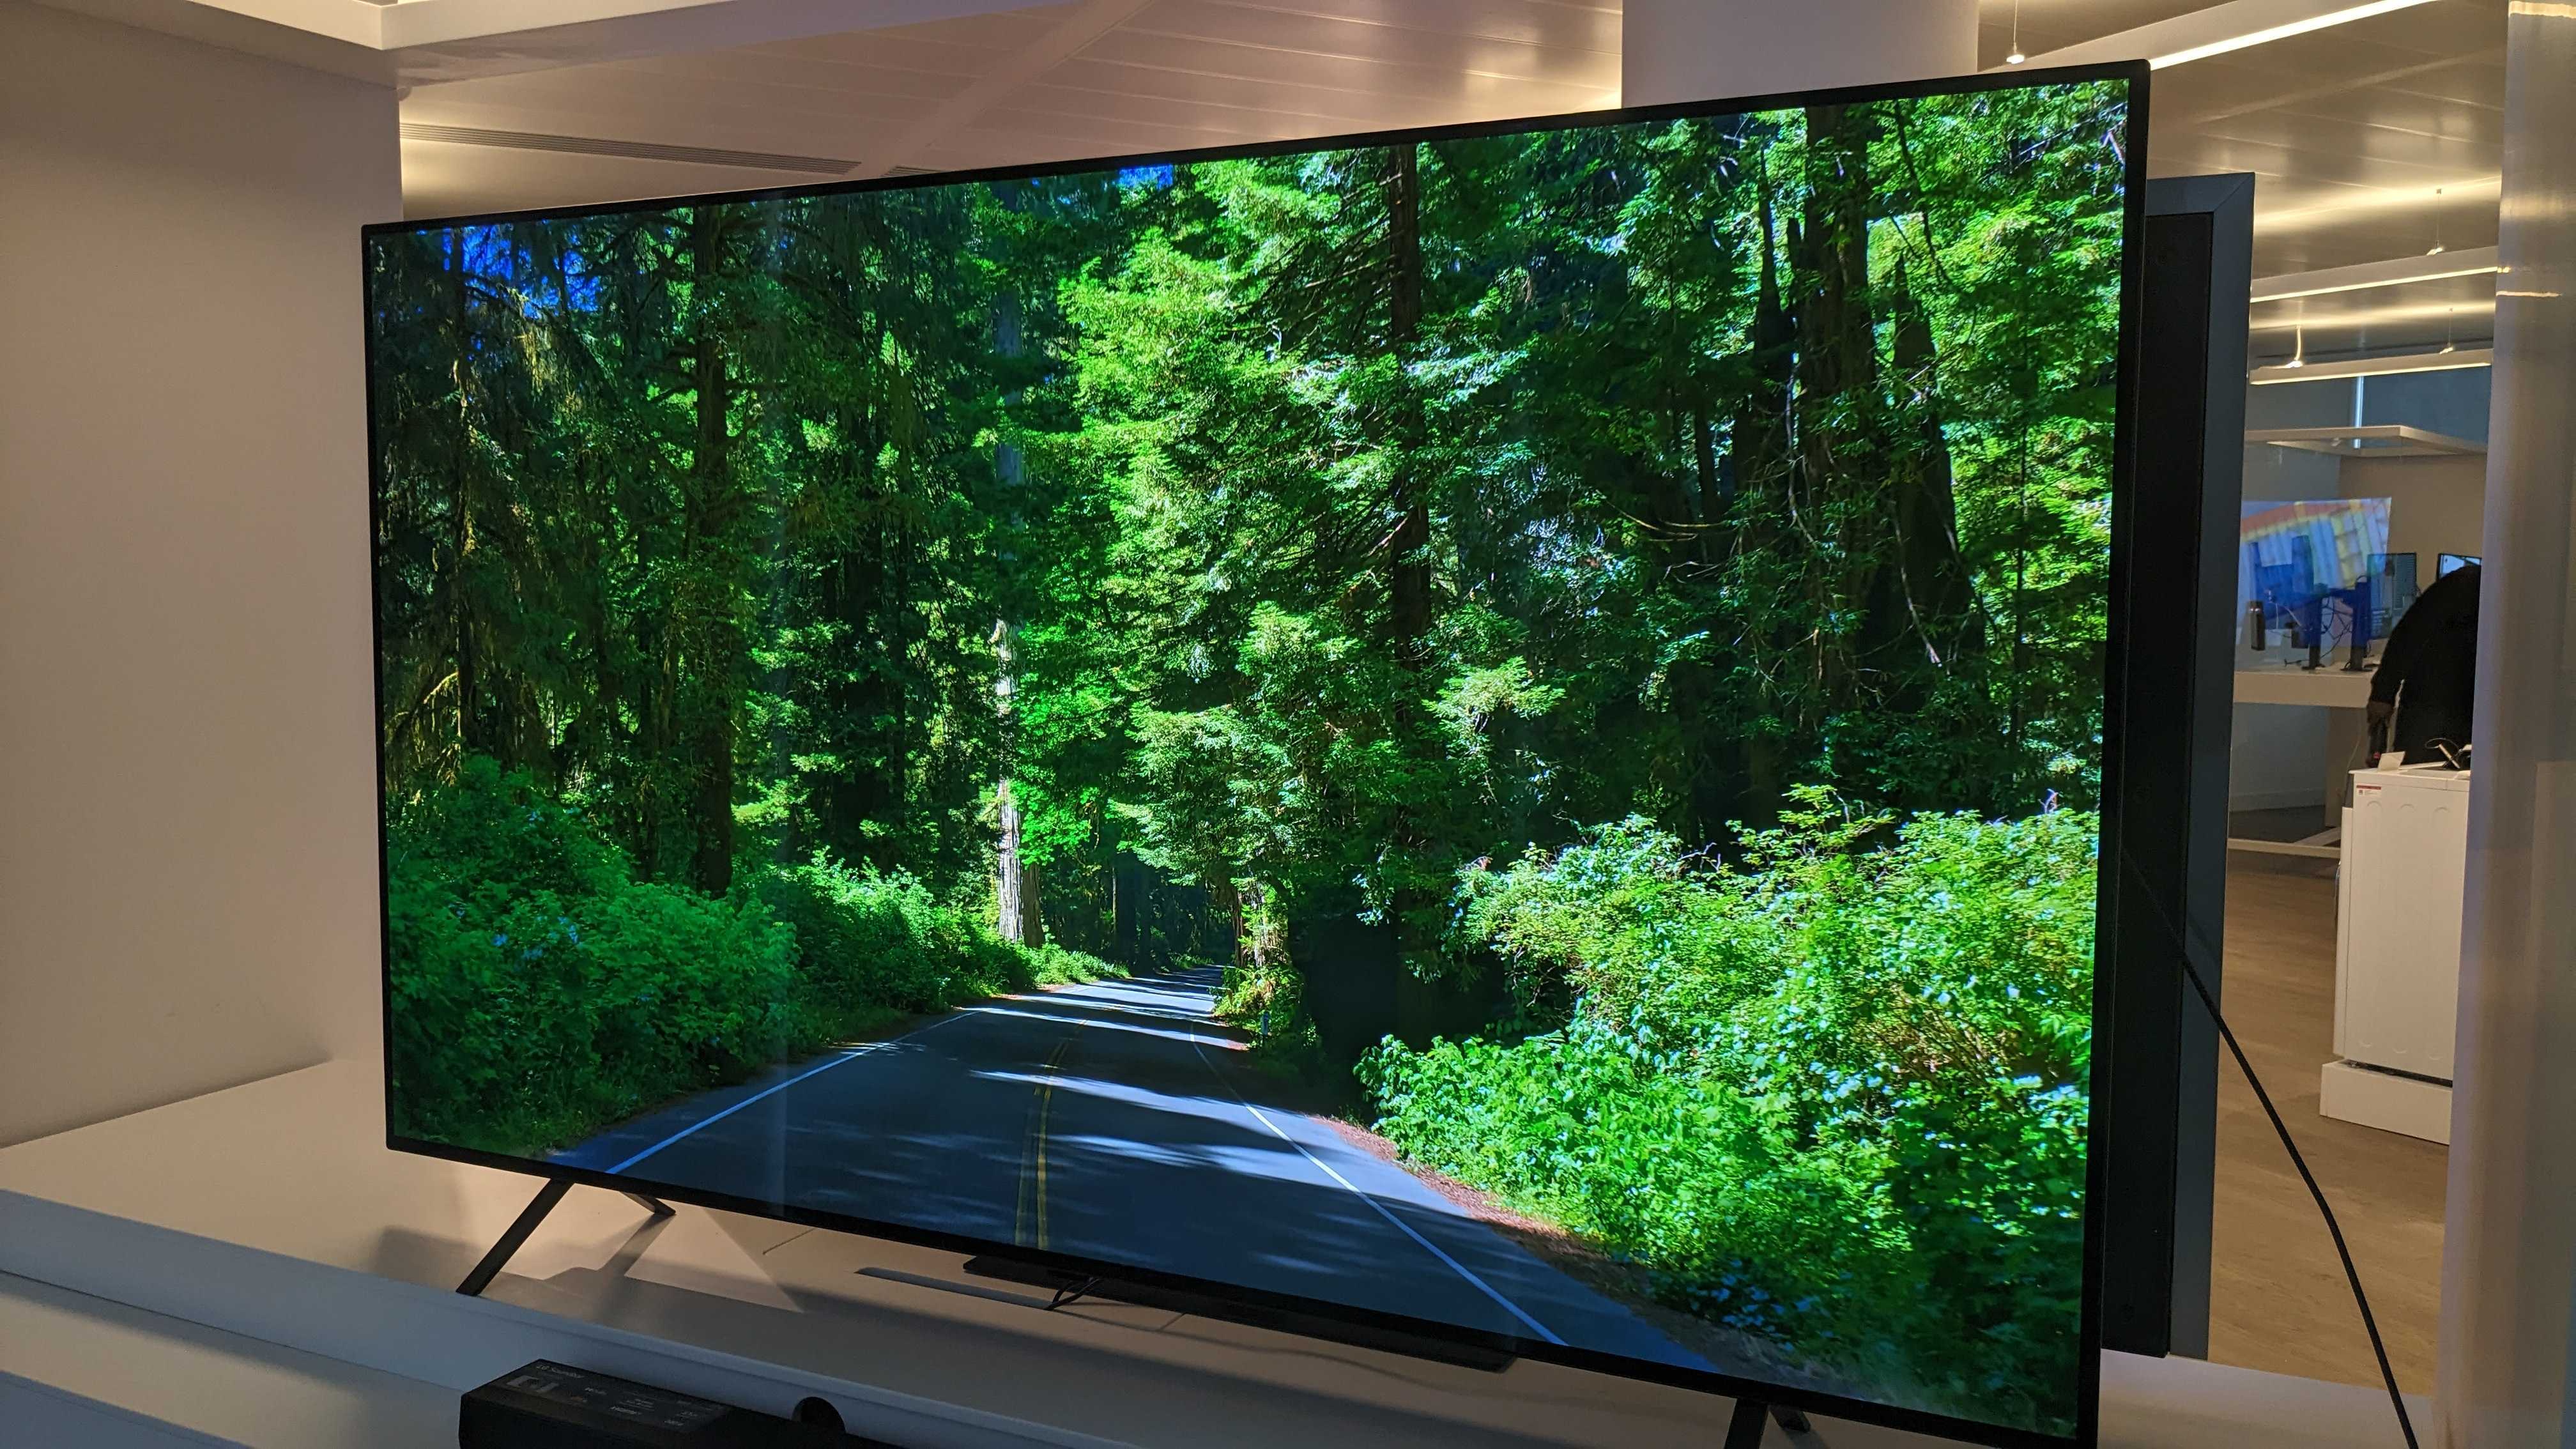 Televisor LG B4 OLED con bosque verde en pantalla